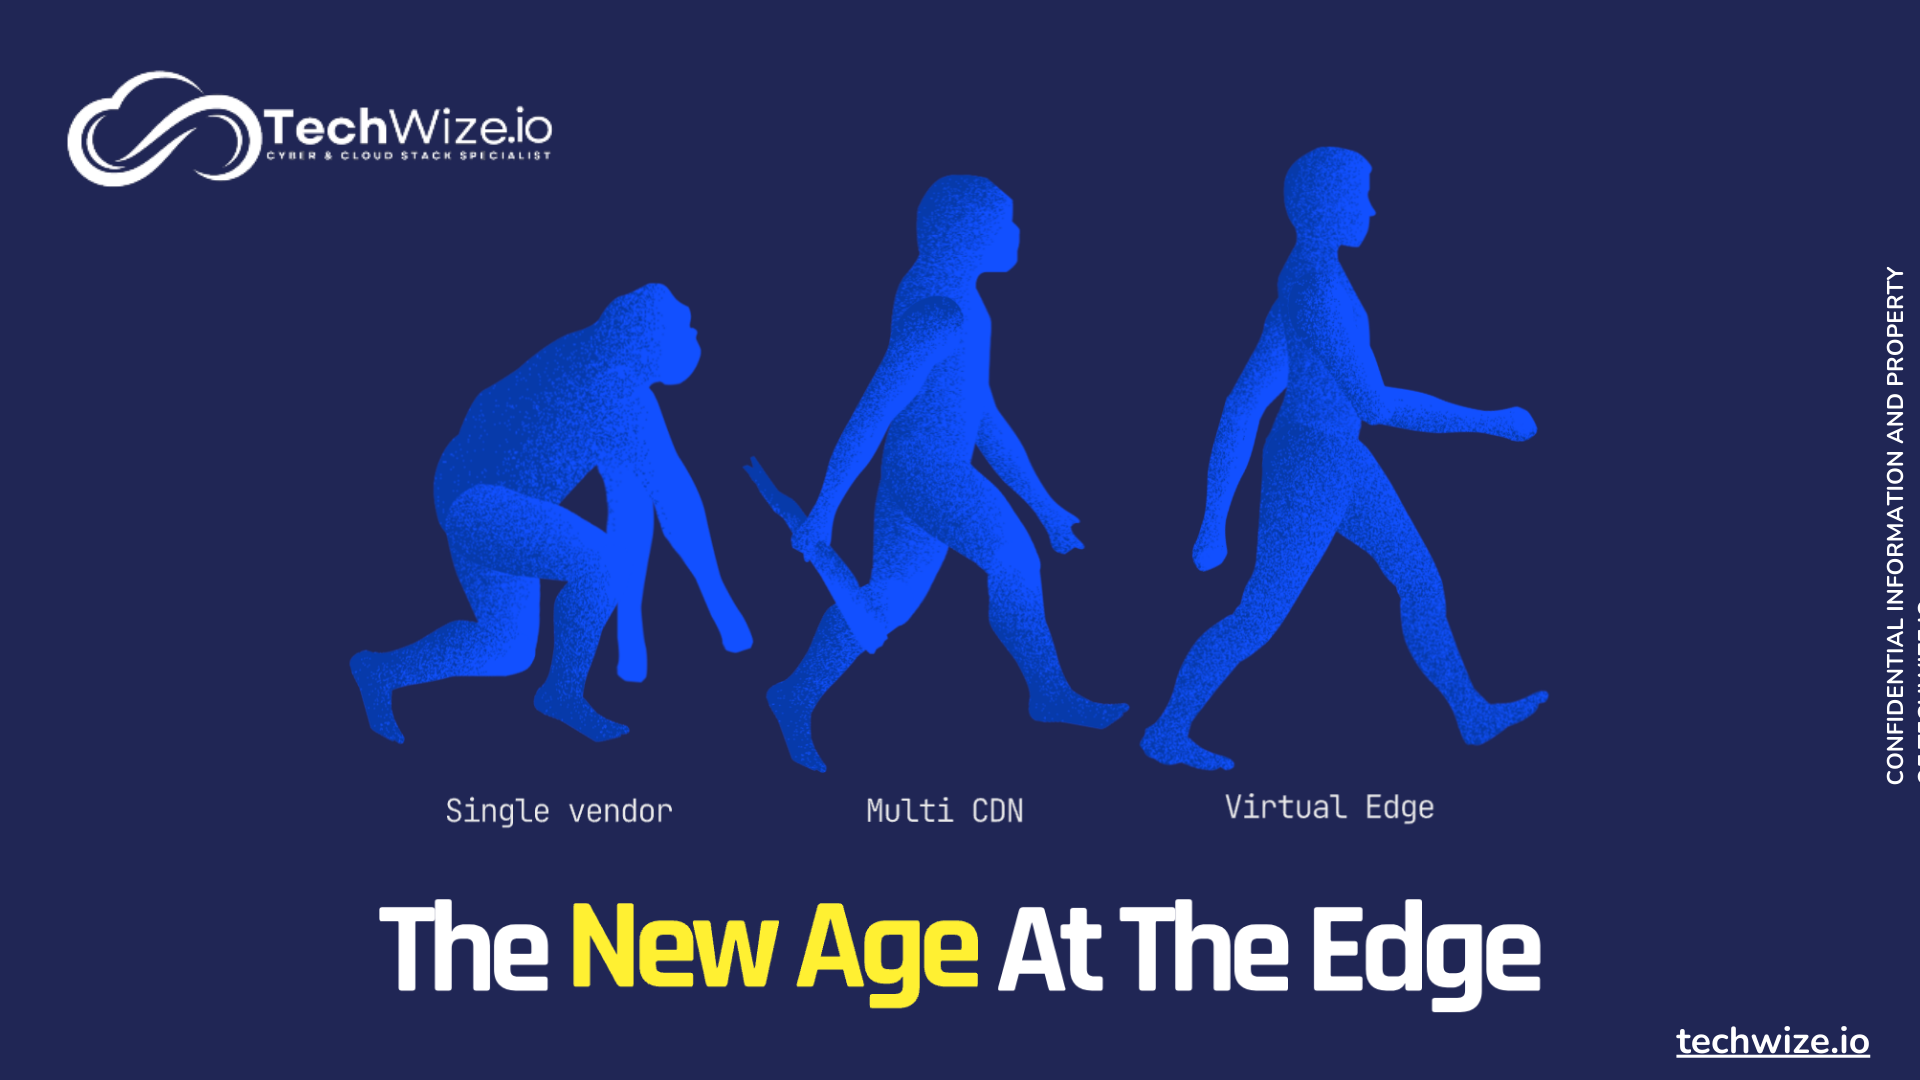 The Content Delivery Network (CDN) Revolution: The Era of the Virtual Edge